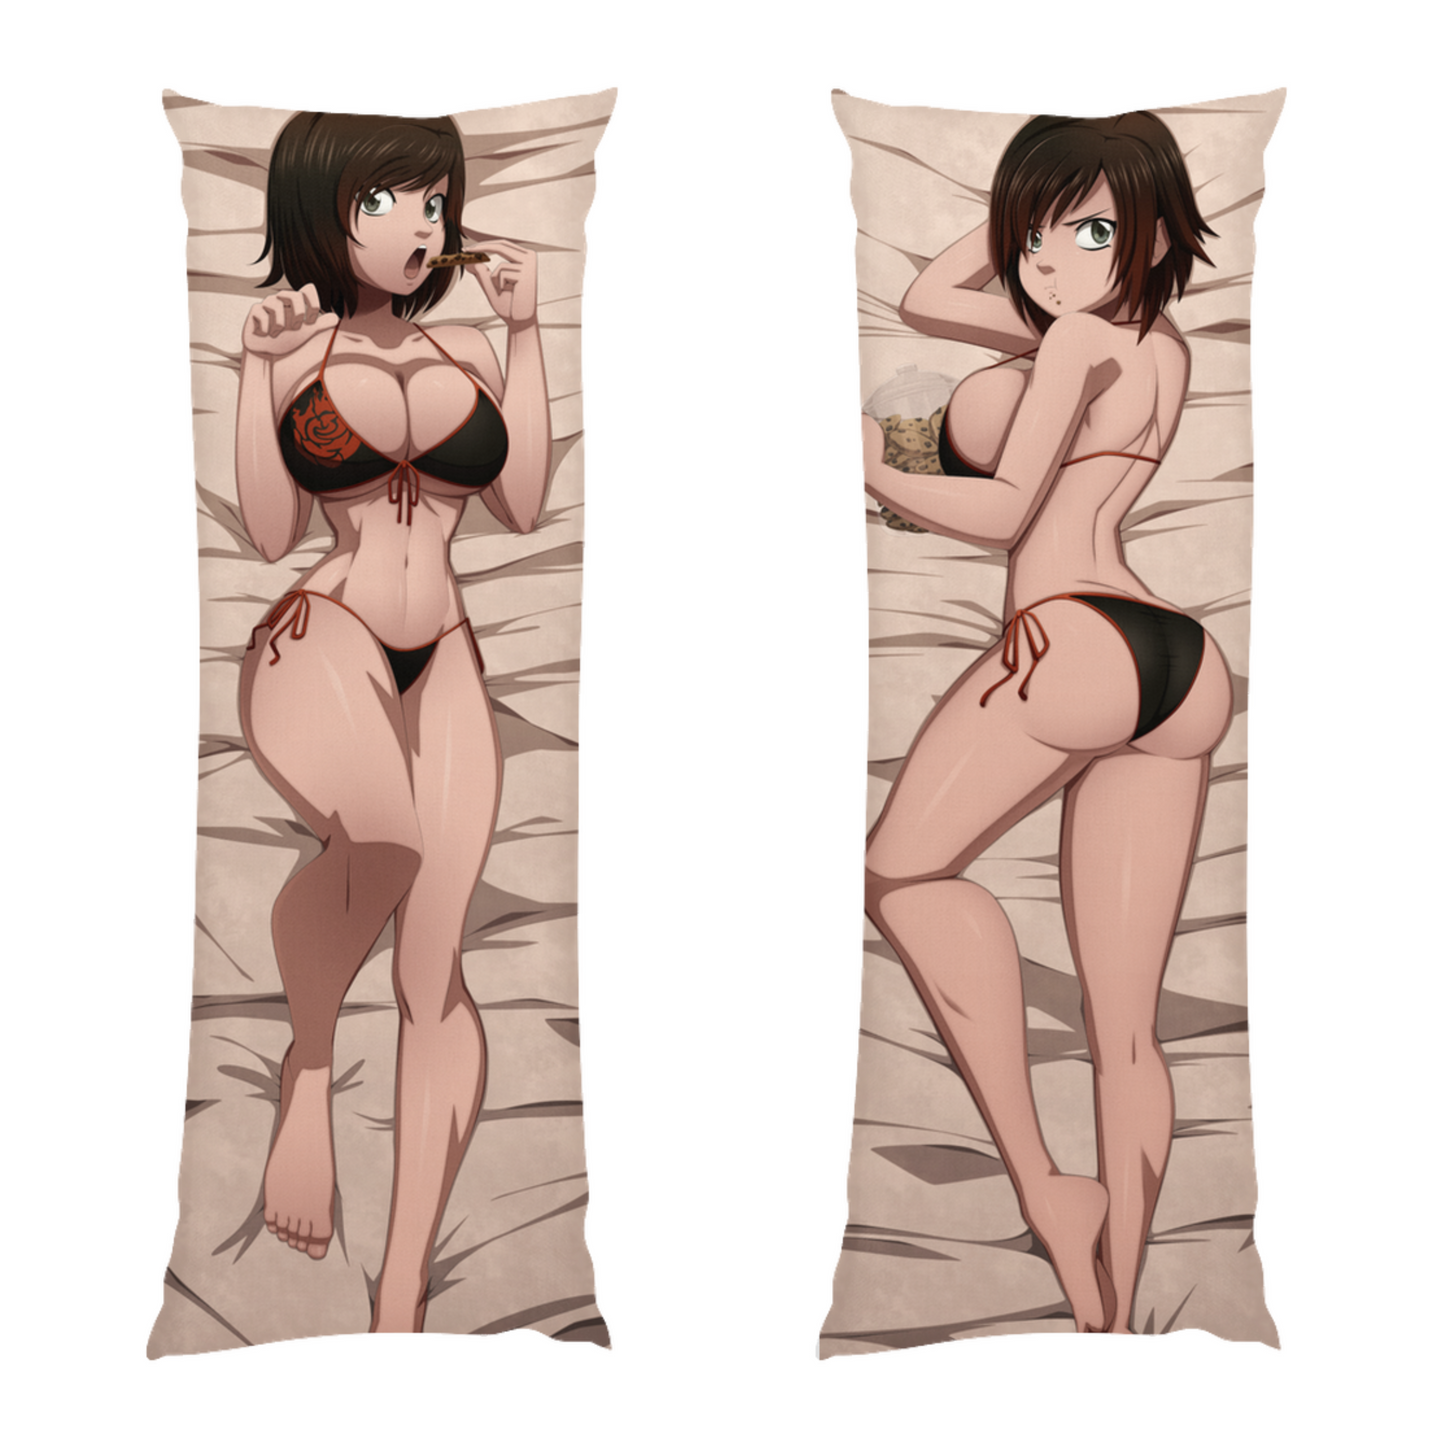 RWBY Anime Body Pillow - Ruby Rose Bikini Ecchi Dakimakura - Waifu Pillow